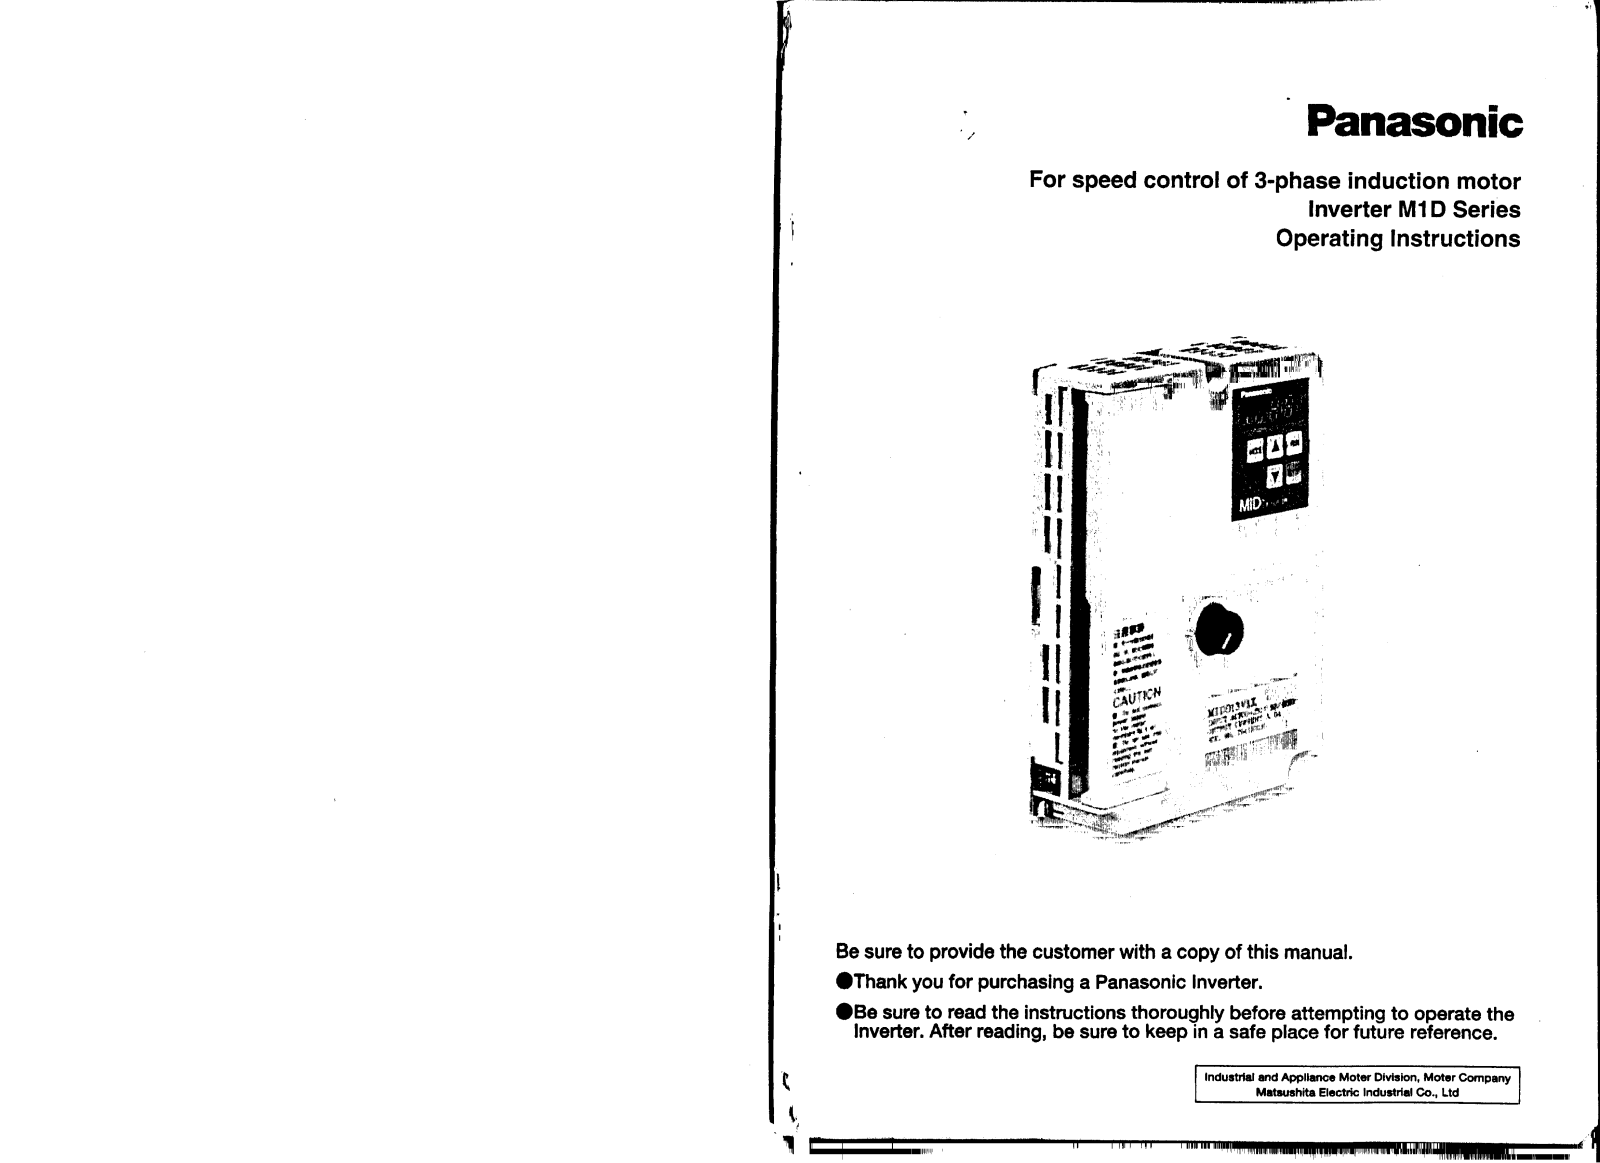 Panasonic M1D User Manual